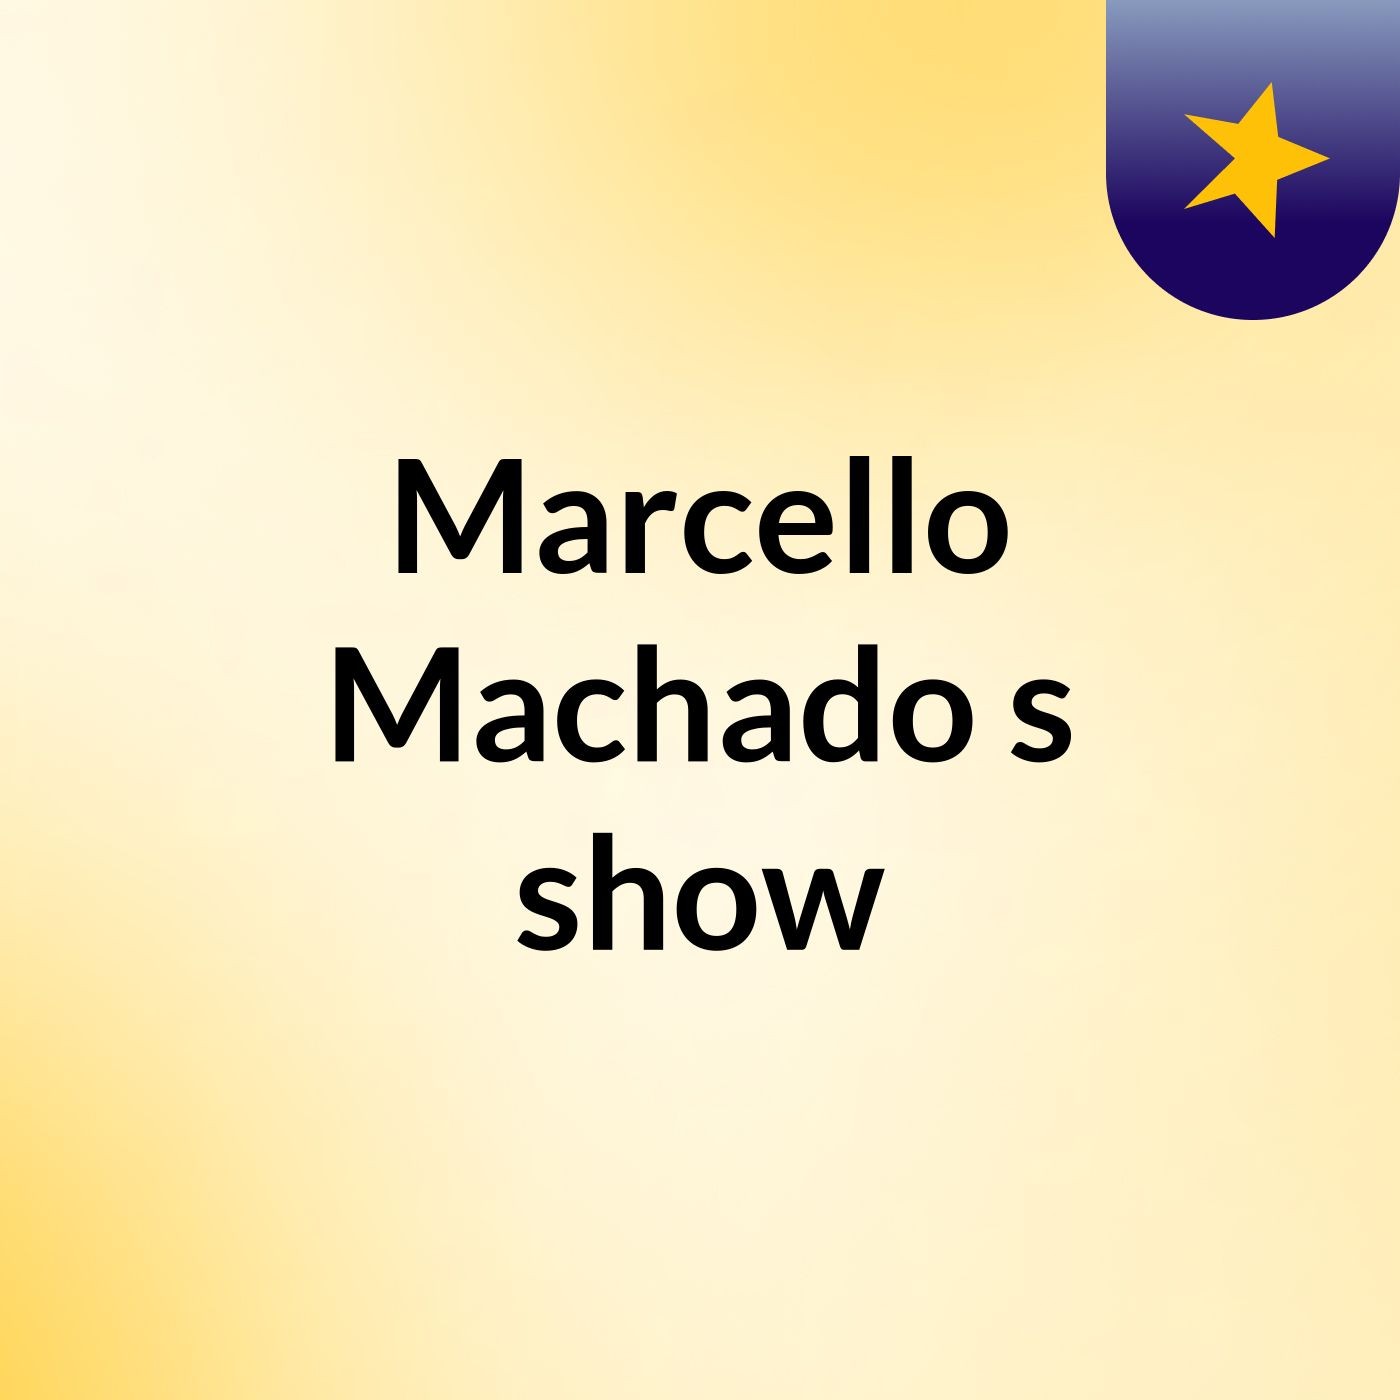 Marcello Machado's show